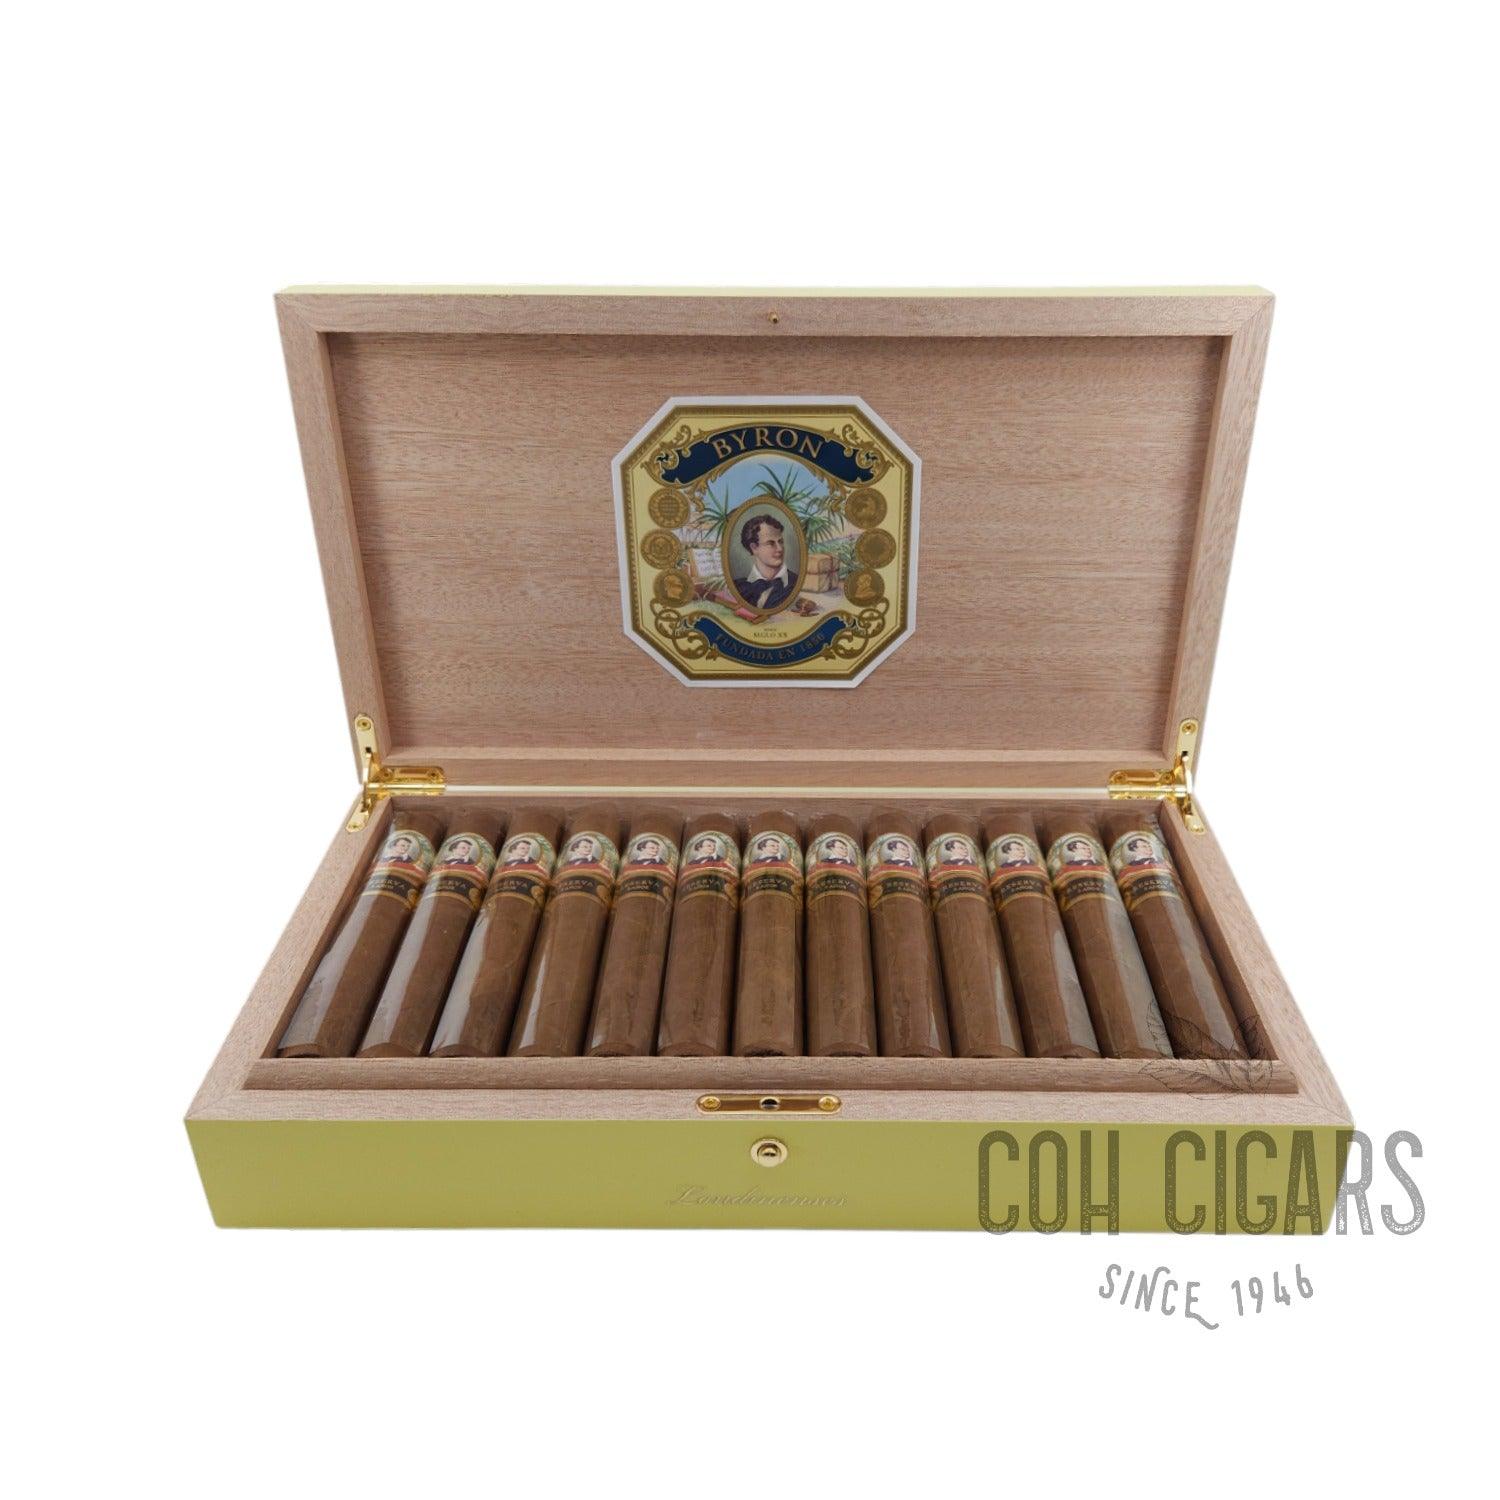 Byron Cigar | Londinenses Selected Tobacco Unidades | Box 25 - hk.cohcigars